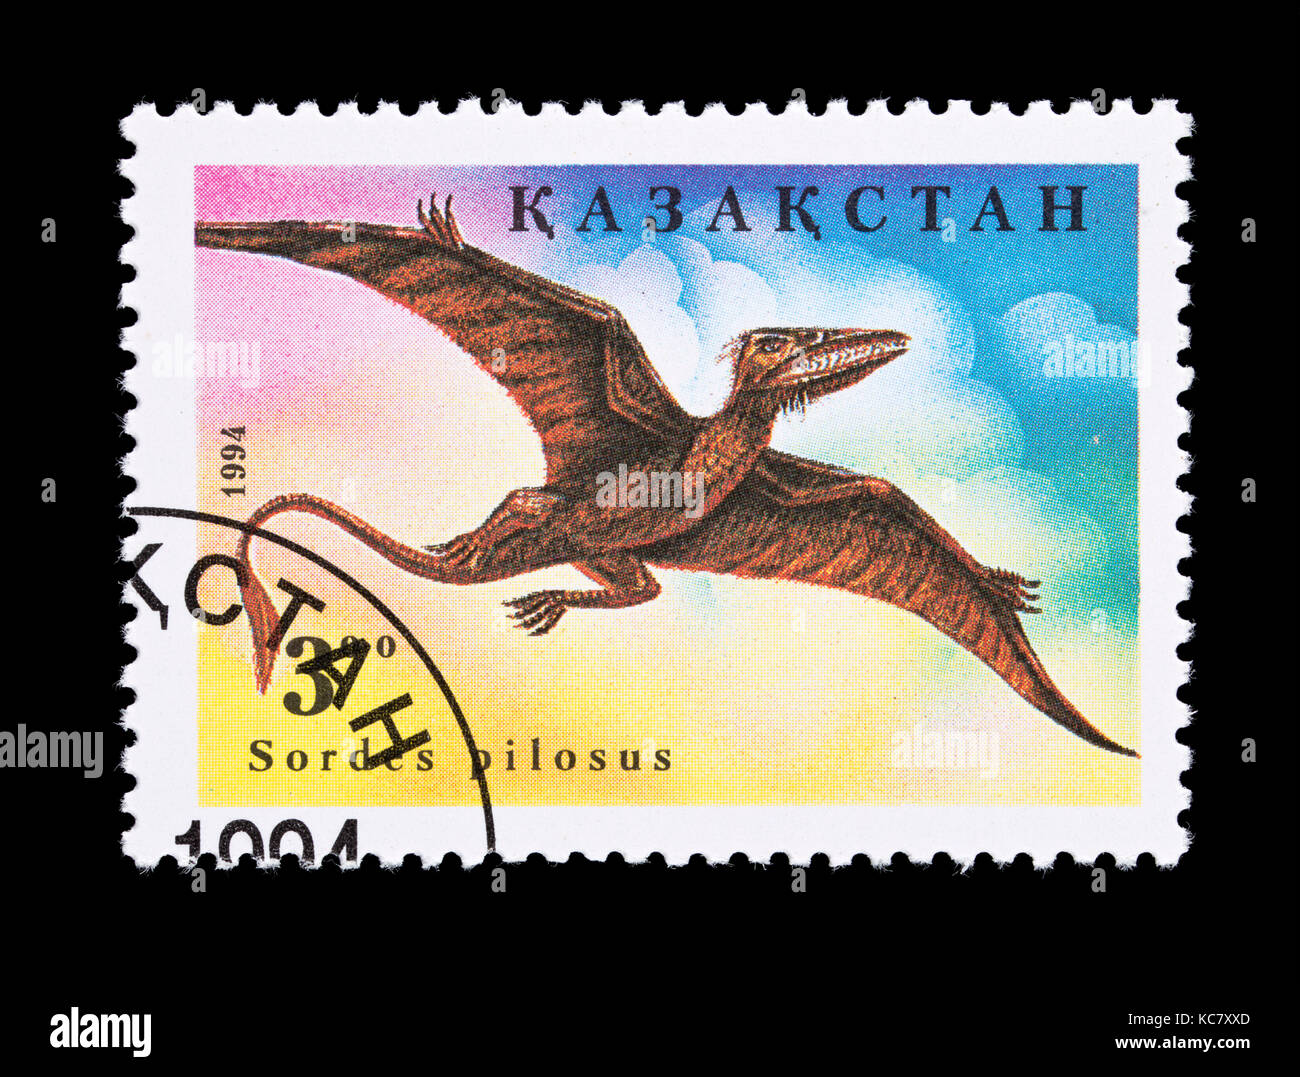 Postage stamp from Kazakhstan depicting a (Sordes pilosus) Stock Photo